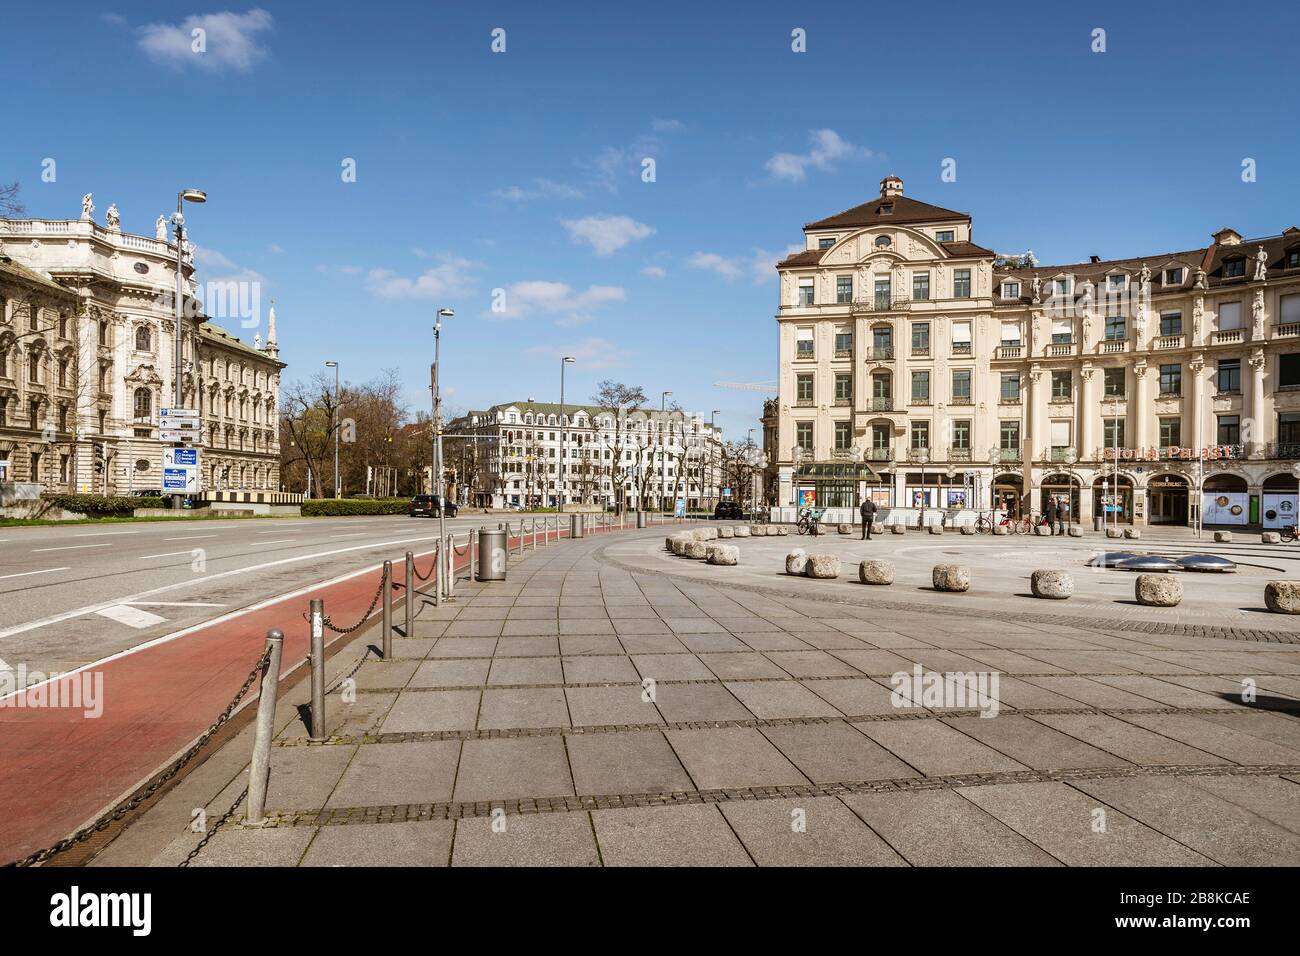 Bavaria-Munich-Germany, 22. März 2020: Empty streets at the Karlsplatz Stachus in Munich because of shutdown due to corona virus Stock Photo